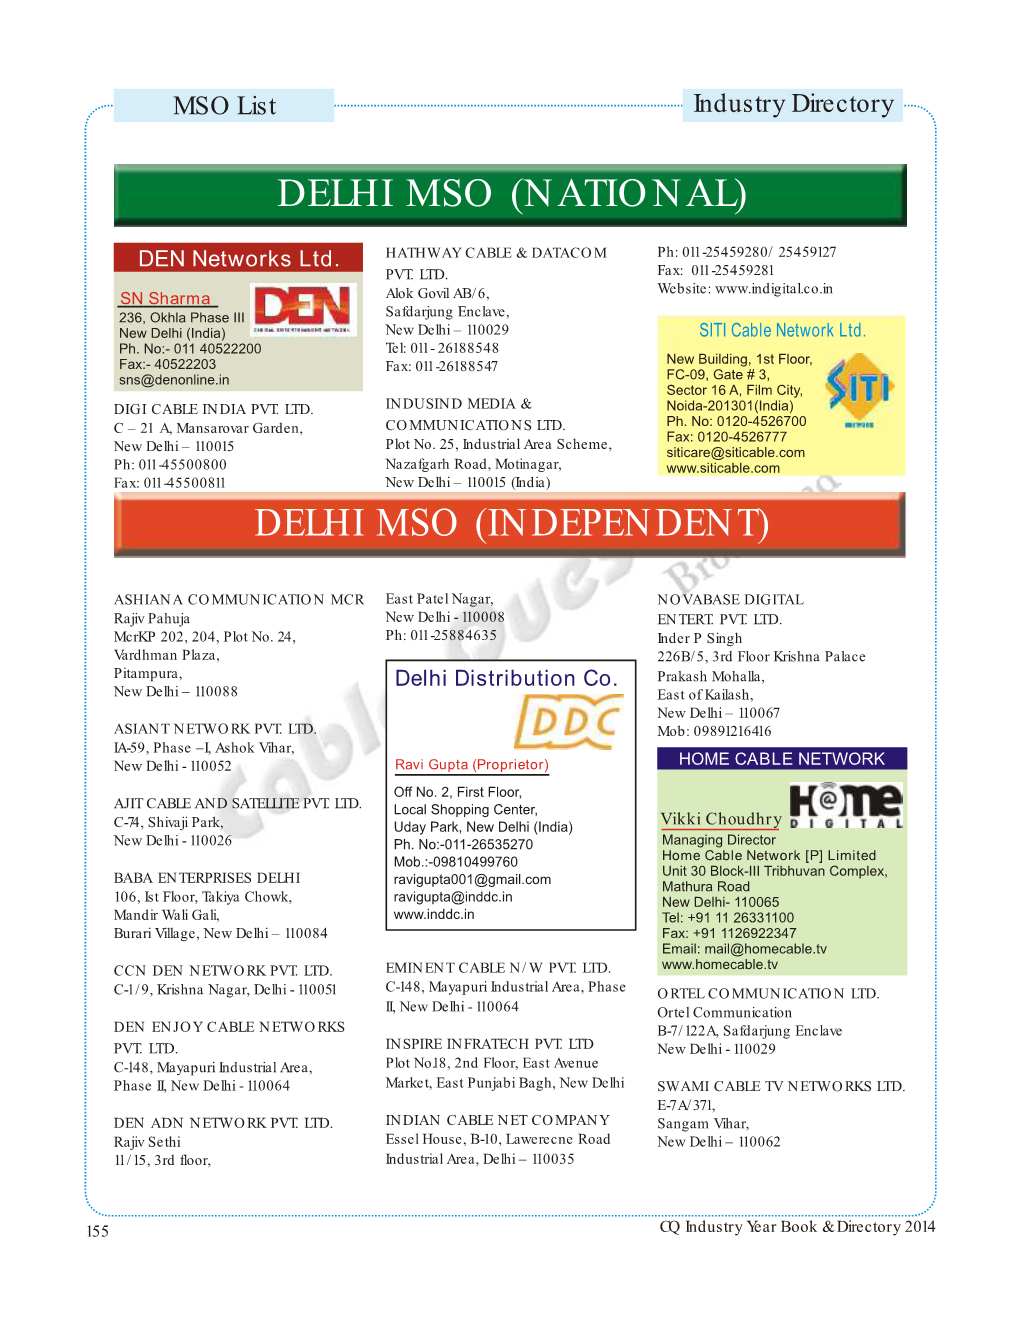 Delhi Mso (National) Delhi Mso (Independent)